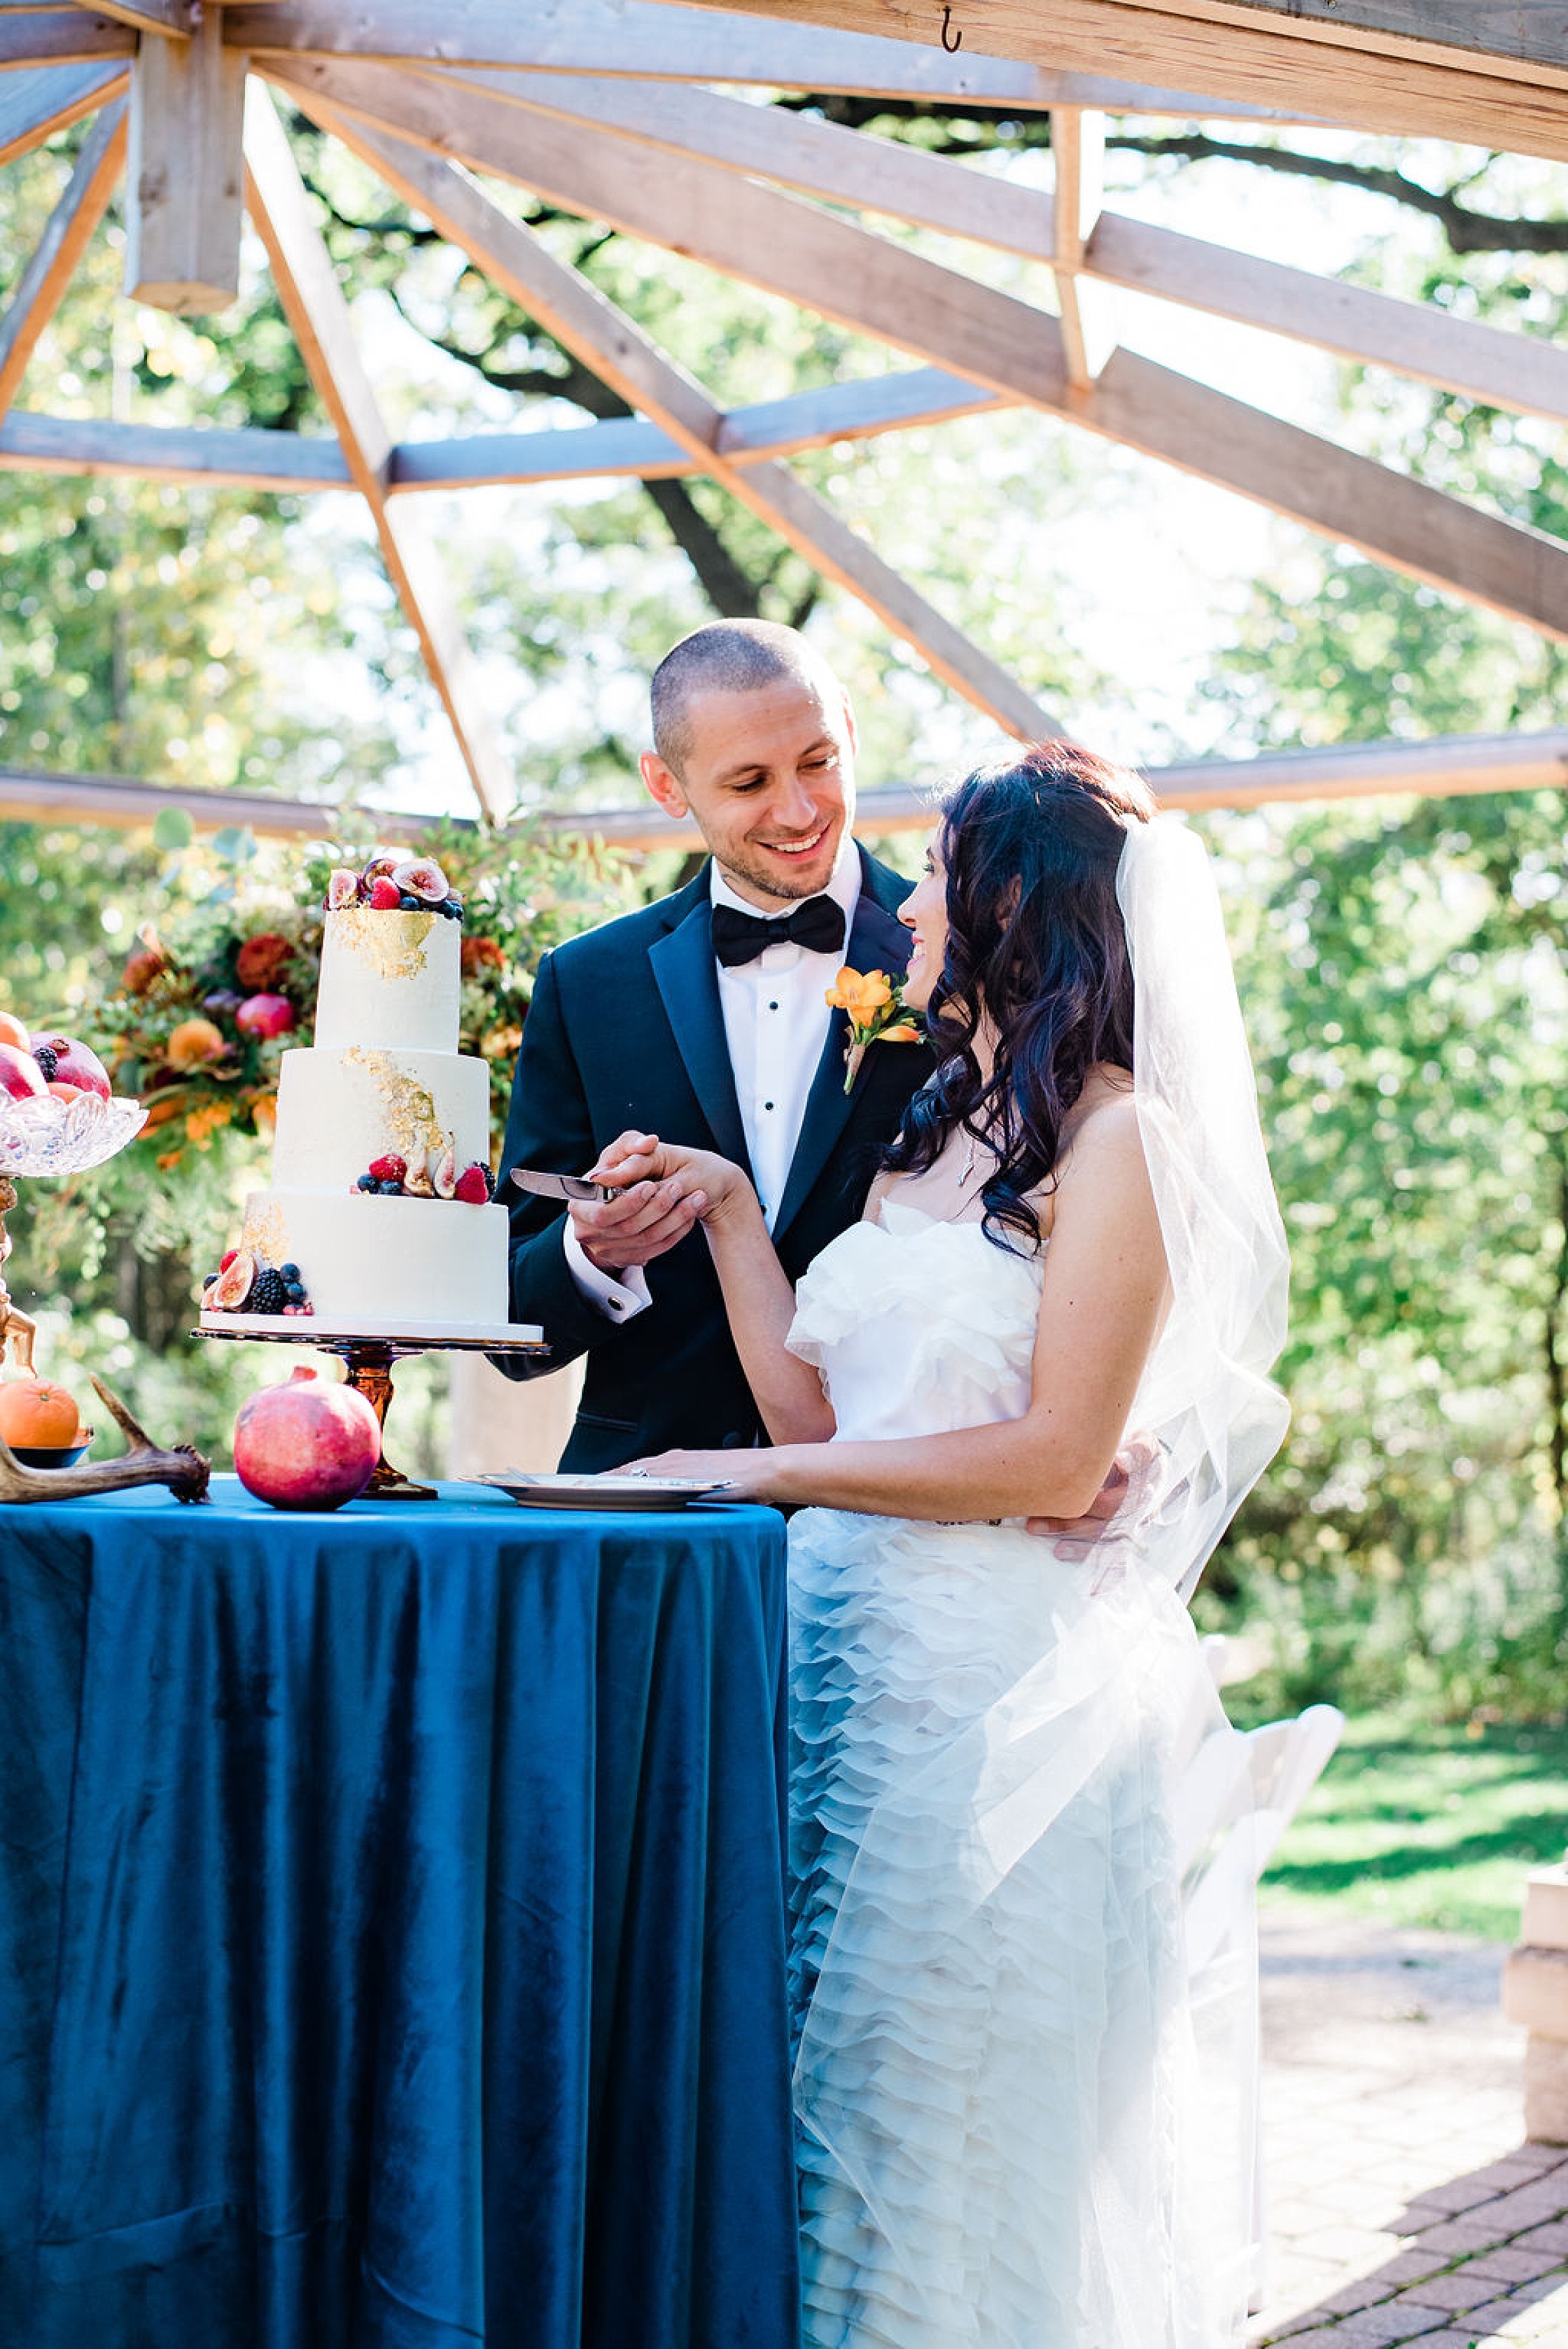 Pantone's Classic Blue Meets Harvest-Inspired Wedding Shoot